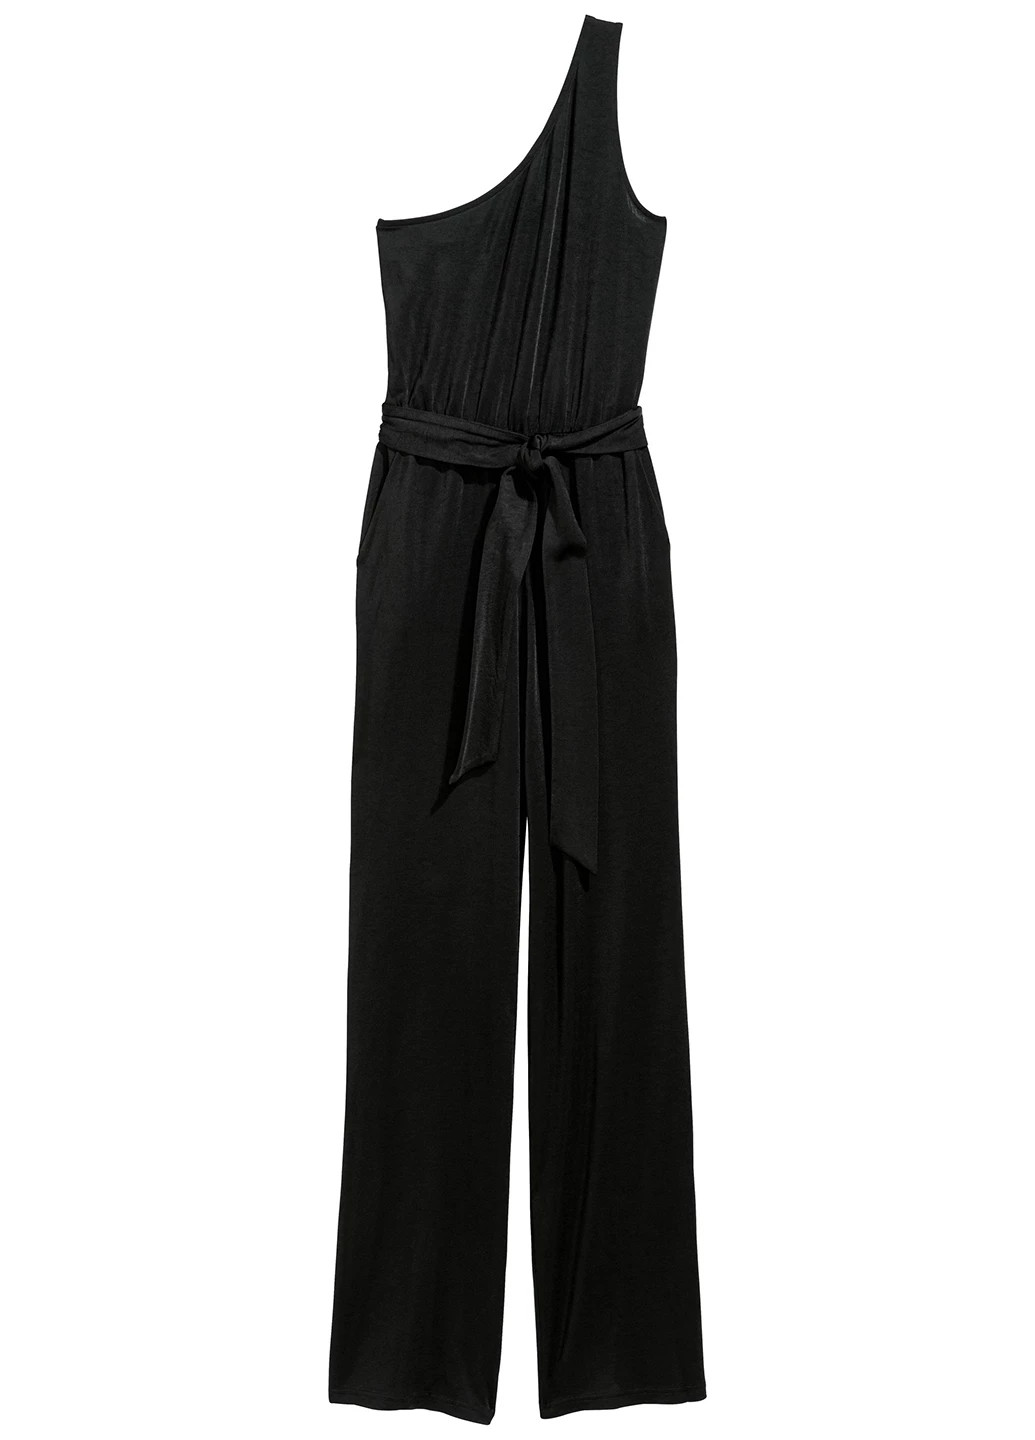 Комбинезон H&M комбинезон-брюки однотонный чёрный кэжуал вискоза, трикотаж